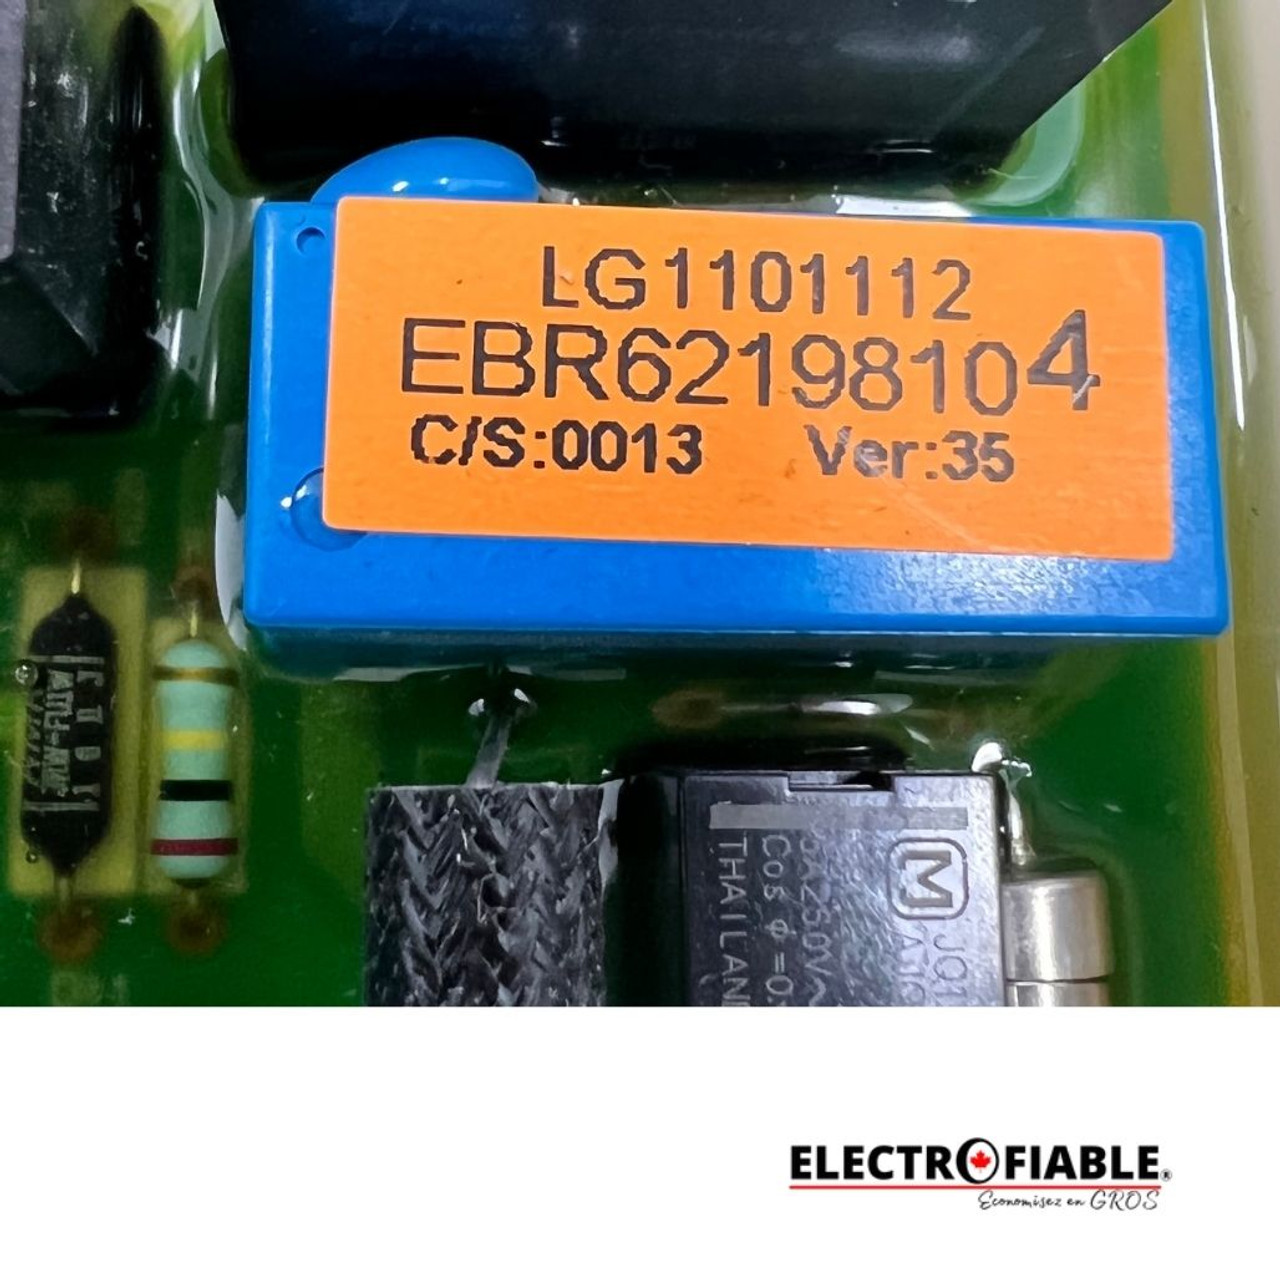 EBR62198104 Main PCB For LG Washer